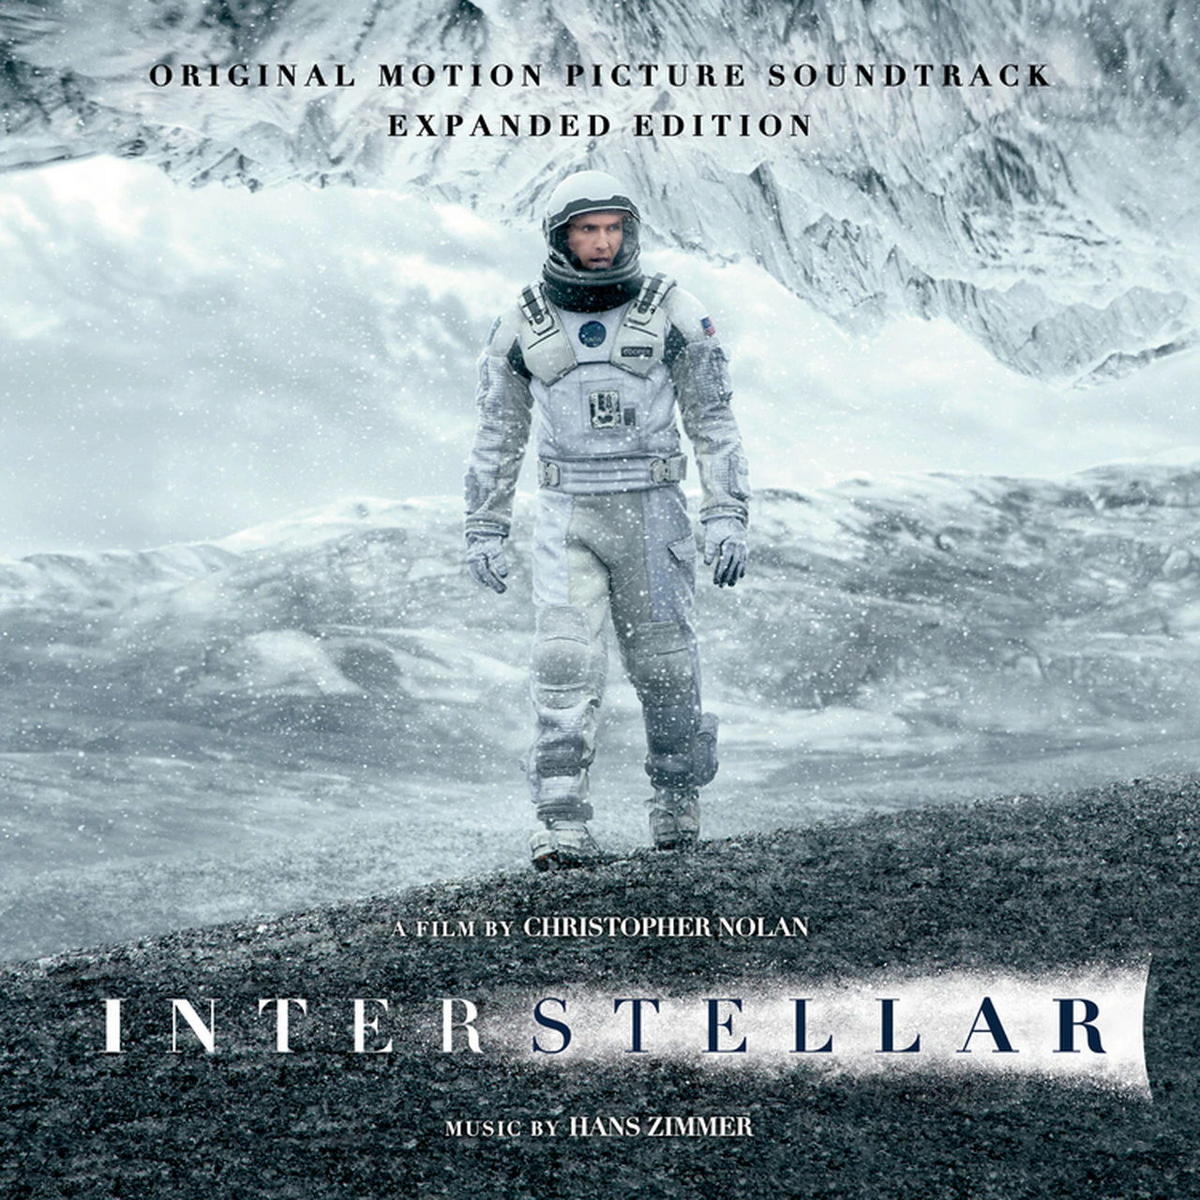 Саундтрек Sony Hans Zimmer - Interstellar (Original Motion Picture Soundtrack) (4LP/Expanded Edition) богомолье повести 8 е издание шмелев и с